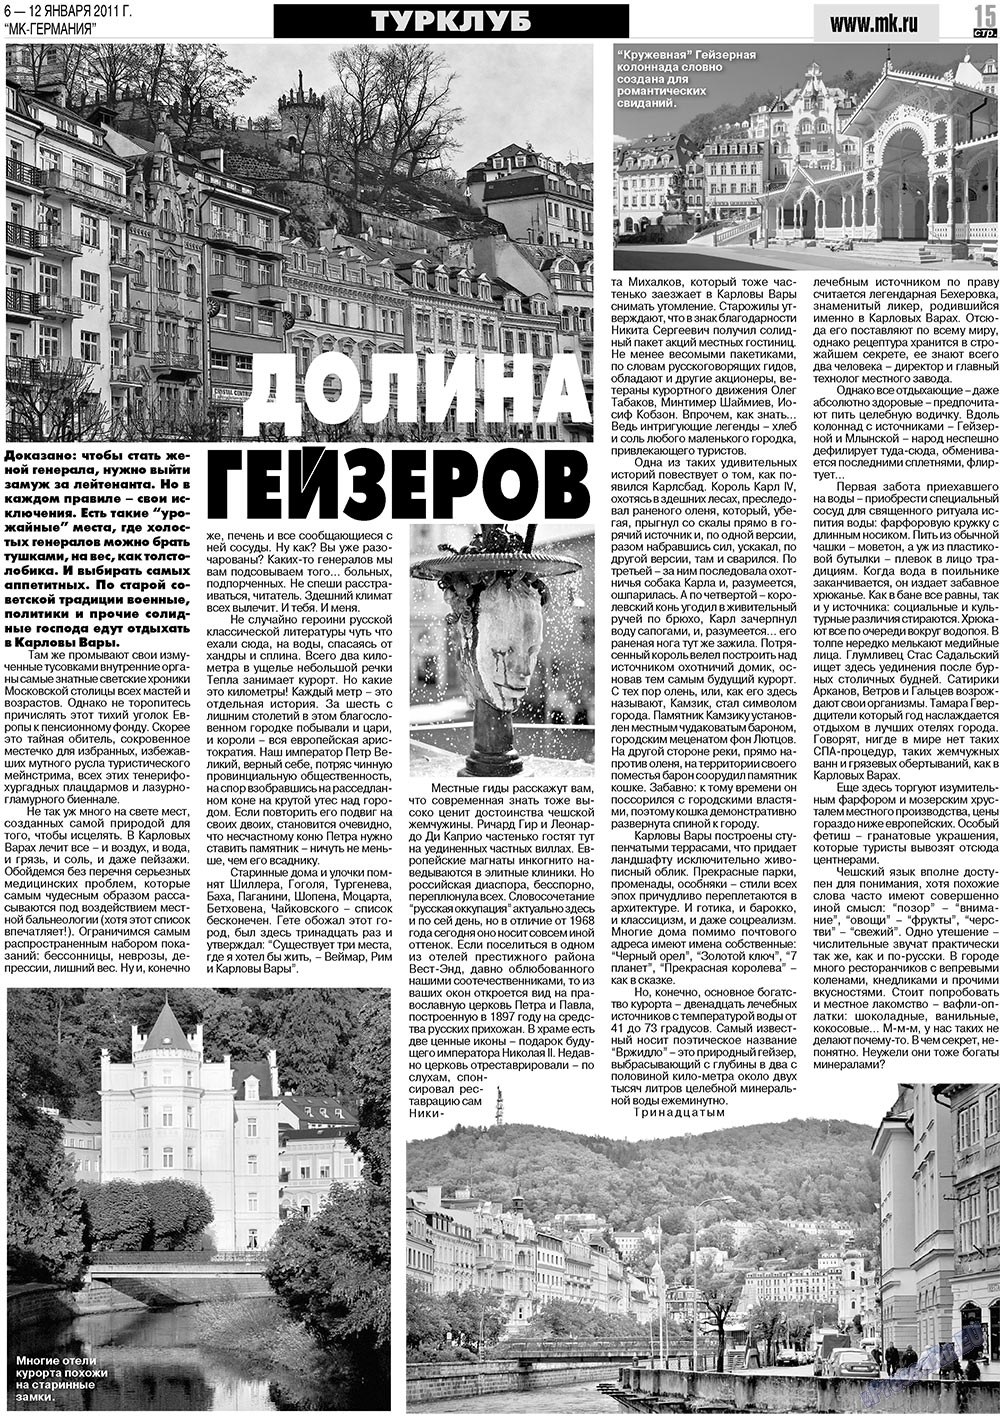 МК-Германия, газета. 2011 №1 стр.15